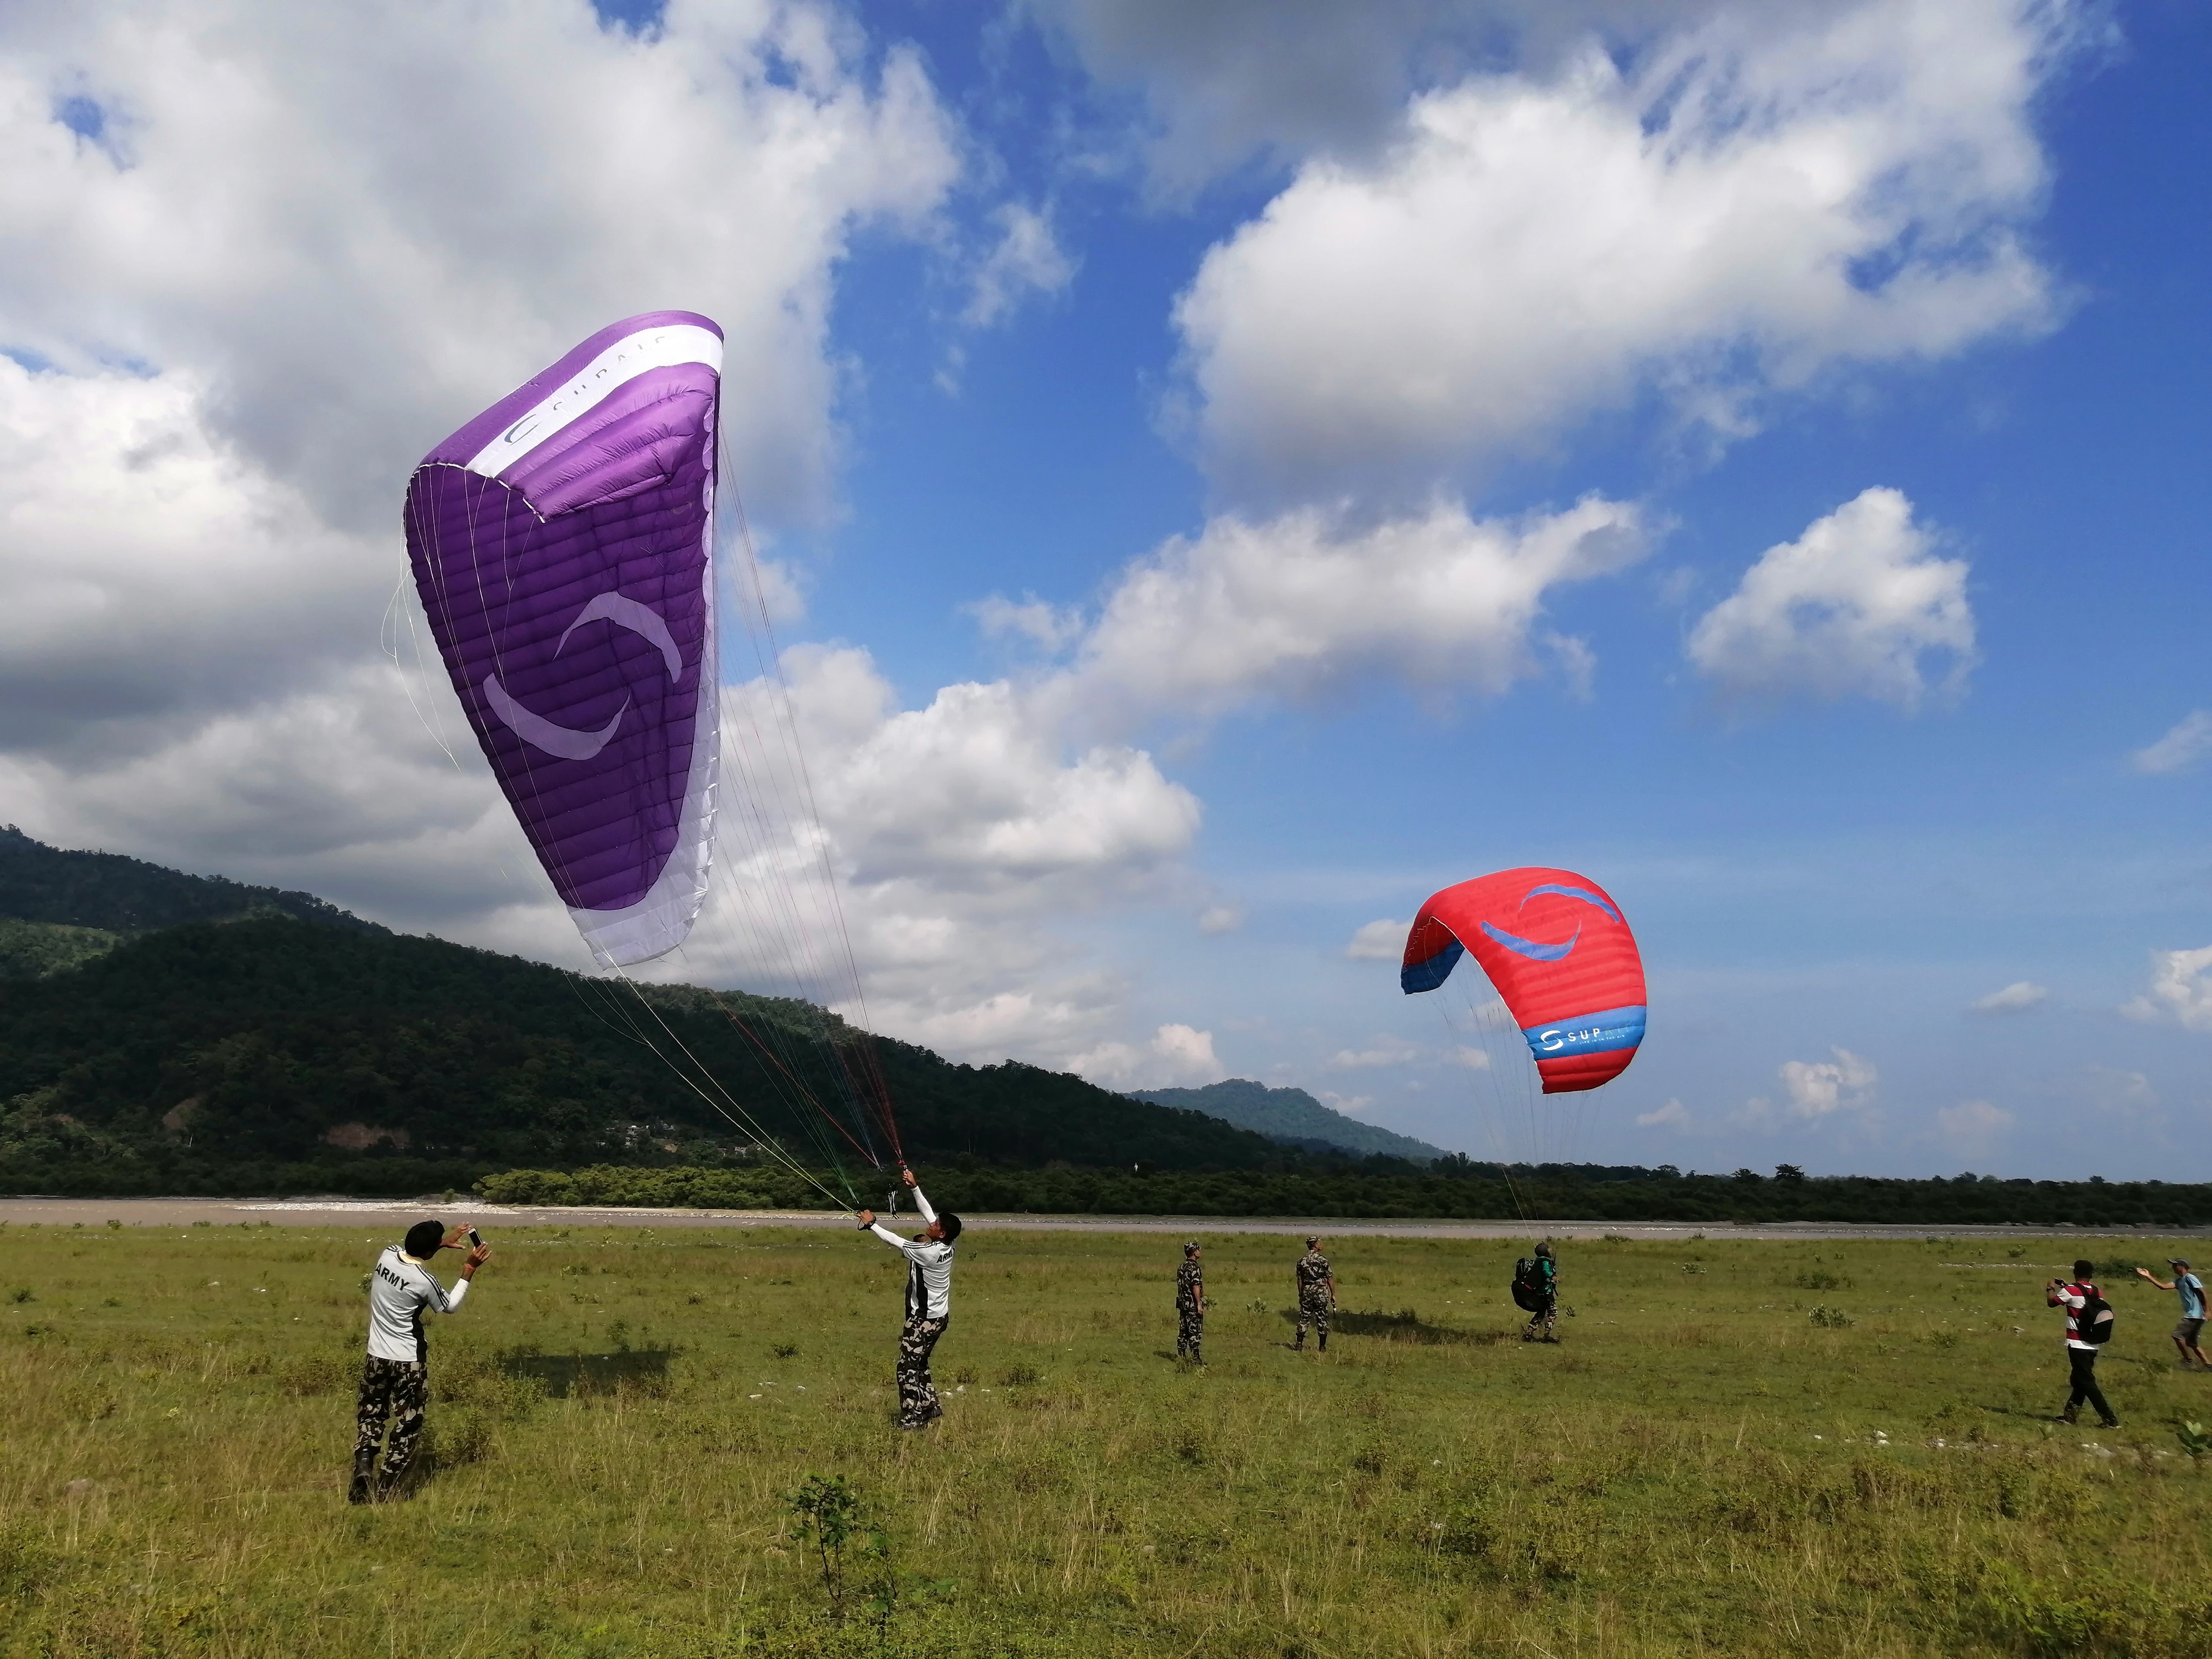 nepali army training in paragliding in ujdayapur 2019 pradeshportal.com